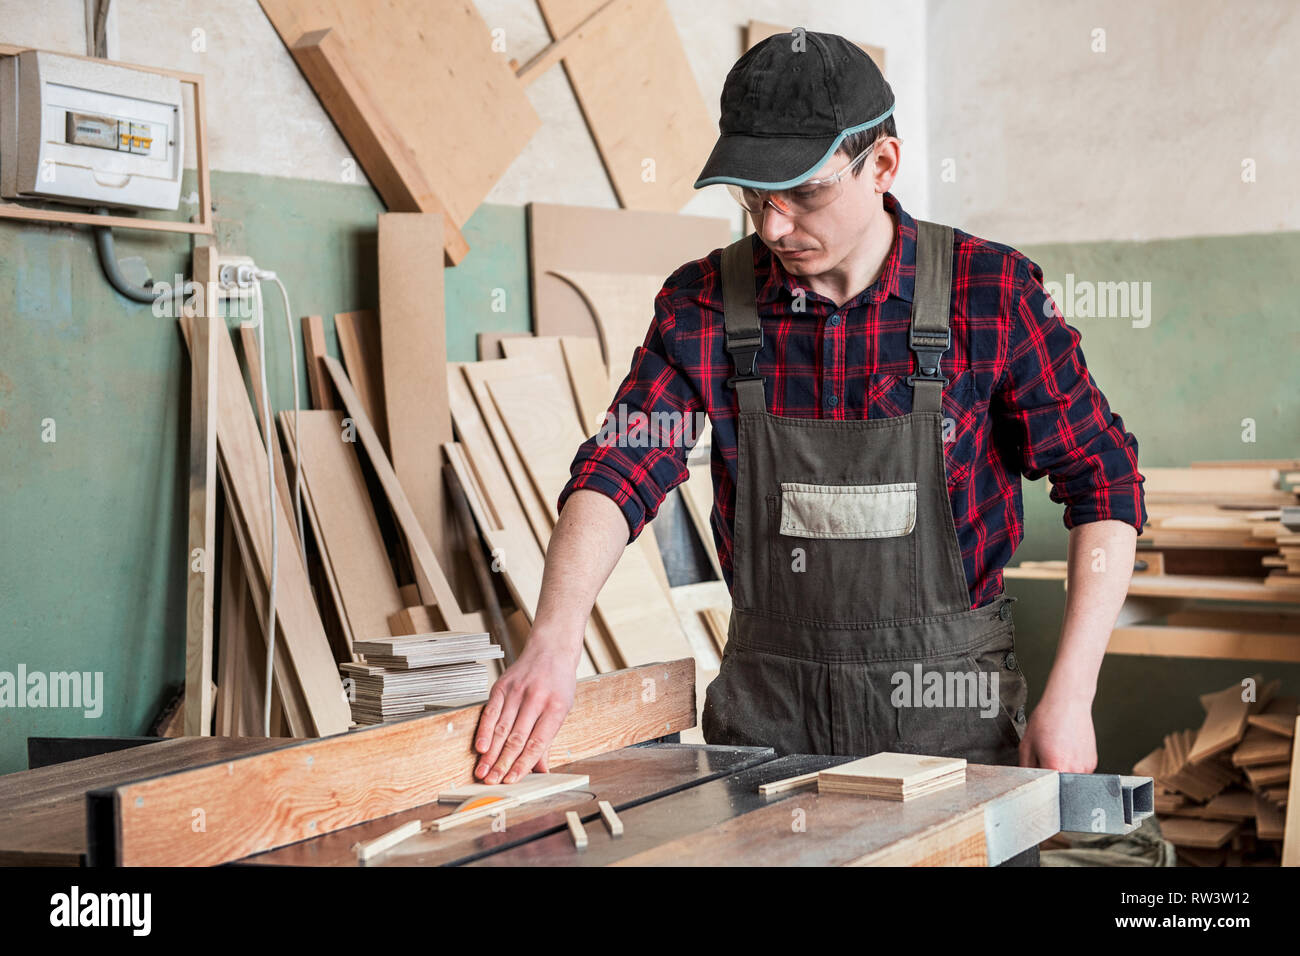 Carpenter worker cutting wooden board Stock Photo